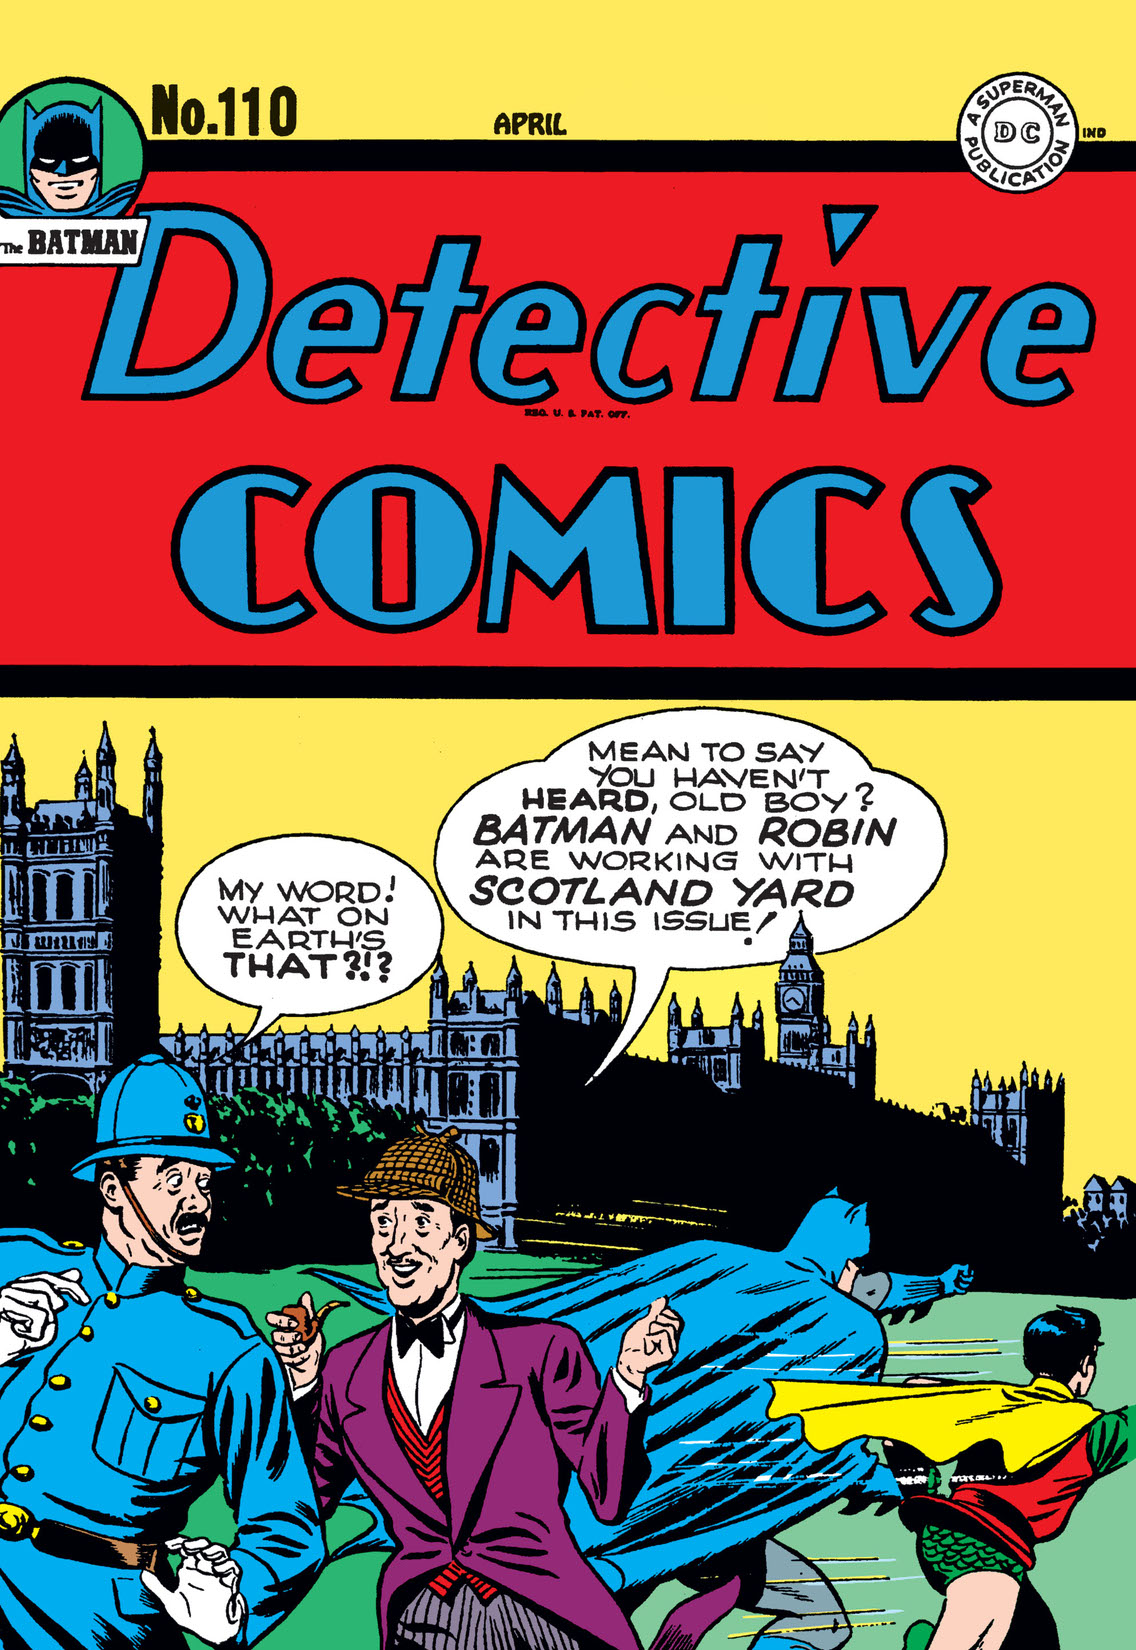 Detective Comics (1937-) #110 preview images